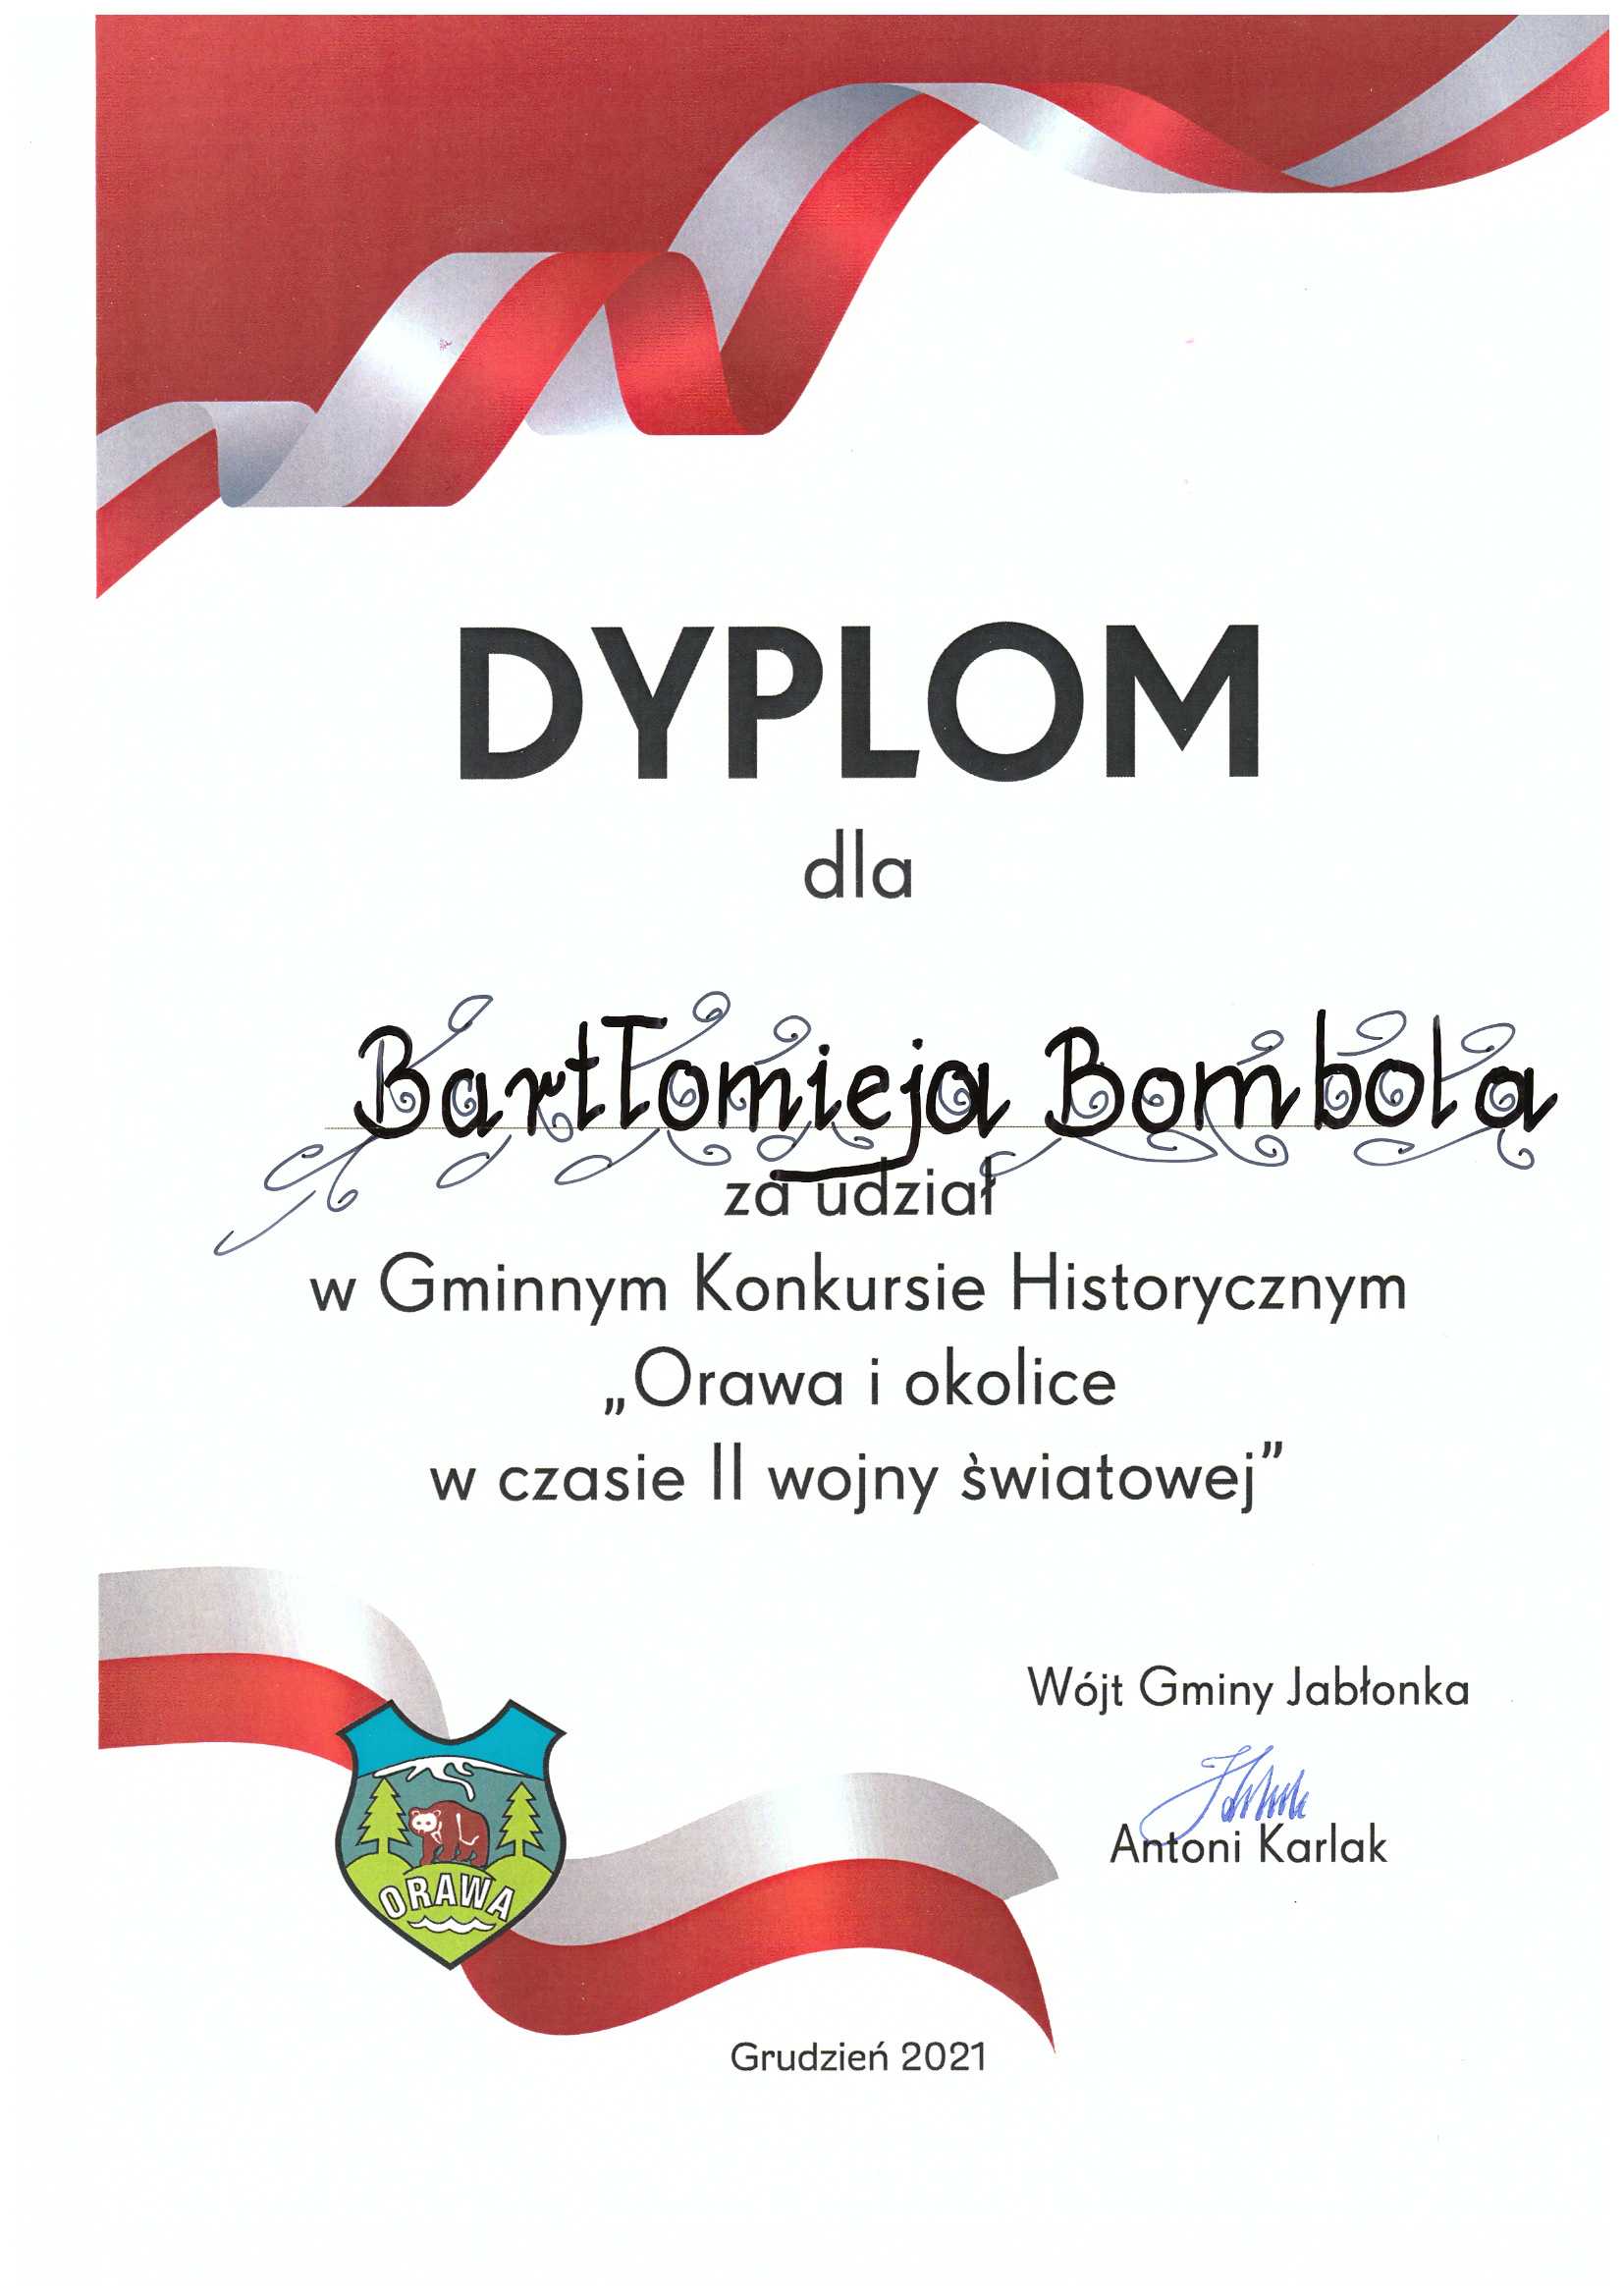 Bartomiej Bombol